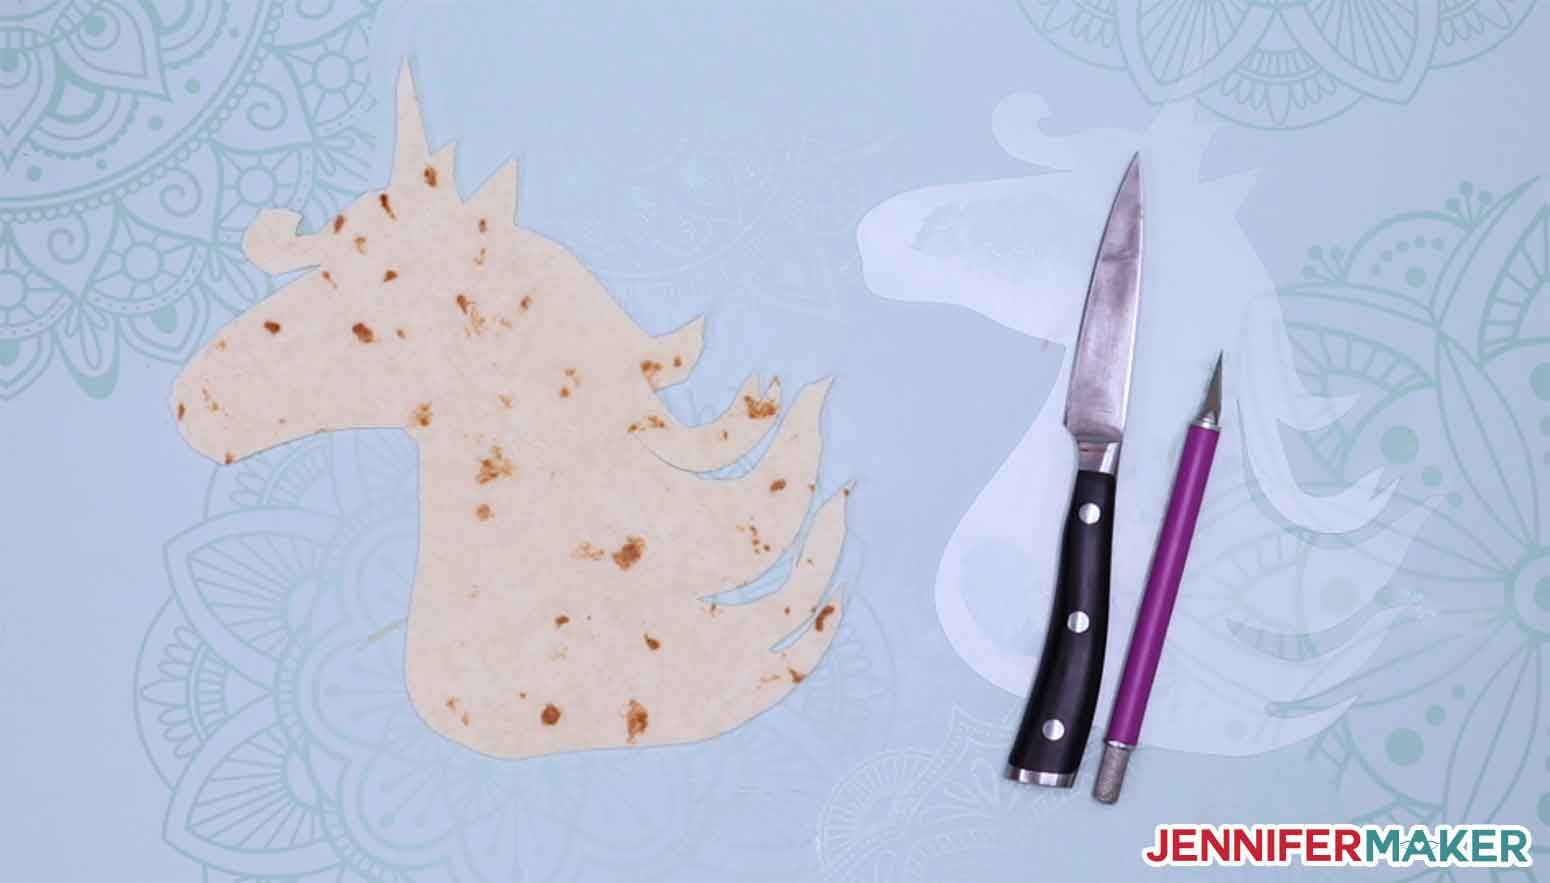 A Cricut tortilla made from a reusable stencil cut on a Cricut cutting machine!